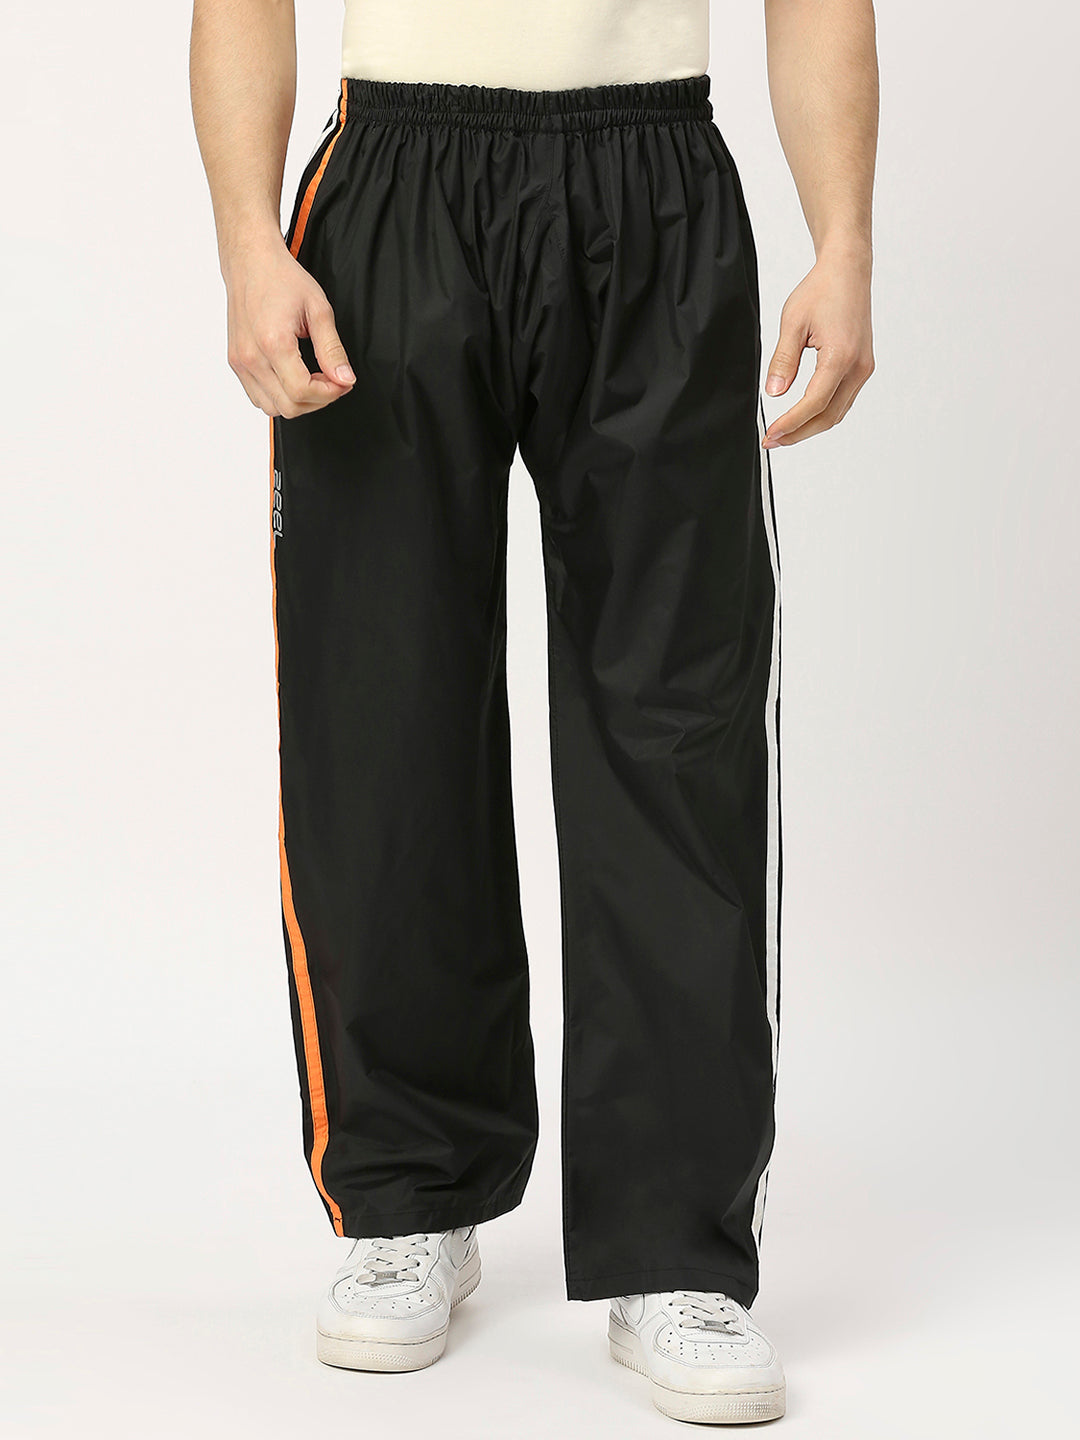 Buy Black  Orange Track Pants for Men by INDIWEAVES Online  Ajiocom